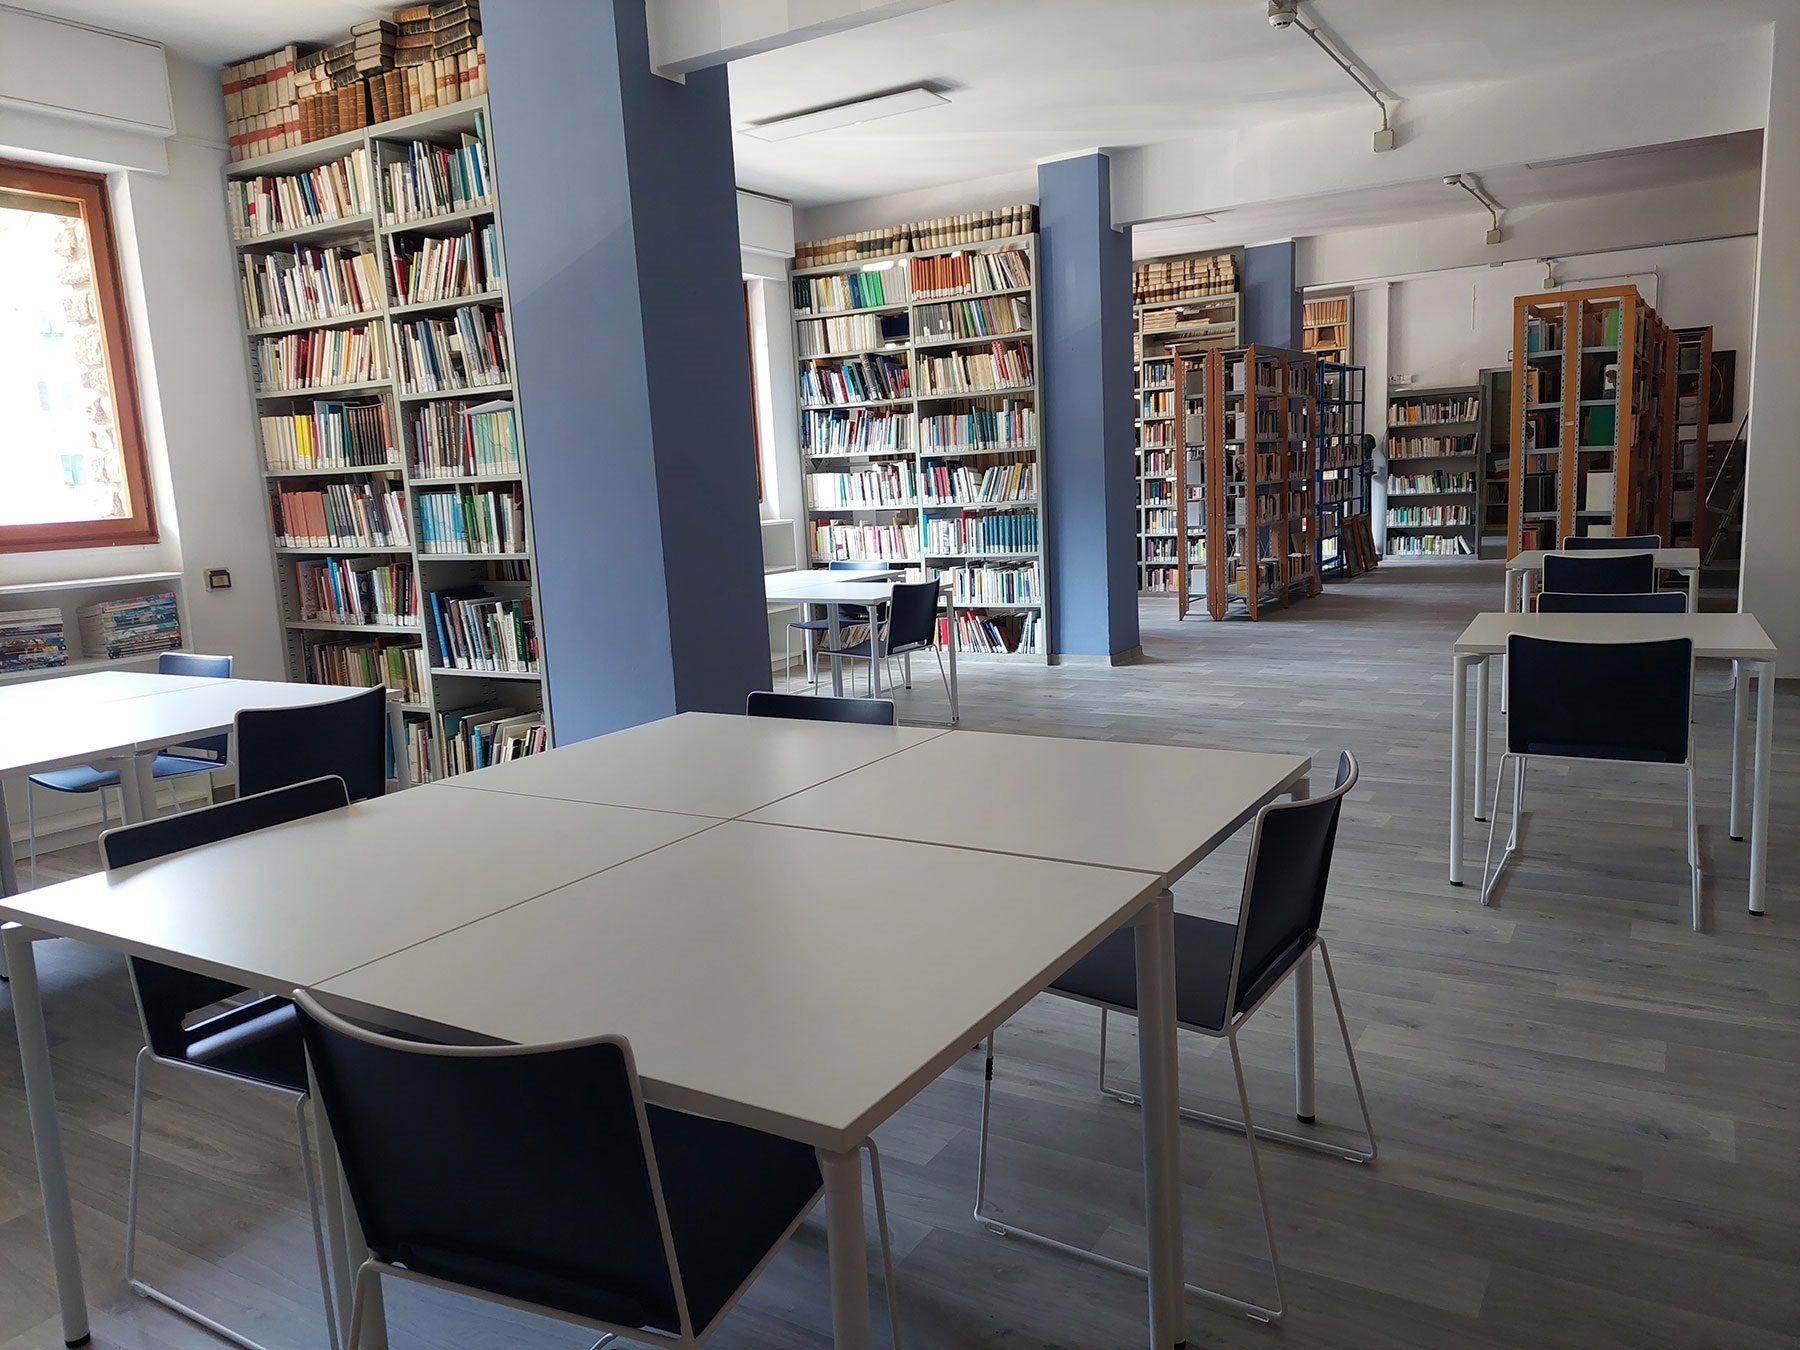 Biblioteca "N. Cuneo": Orario invernale